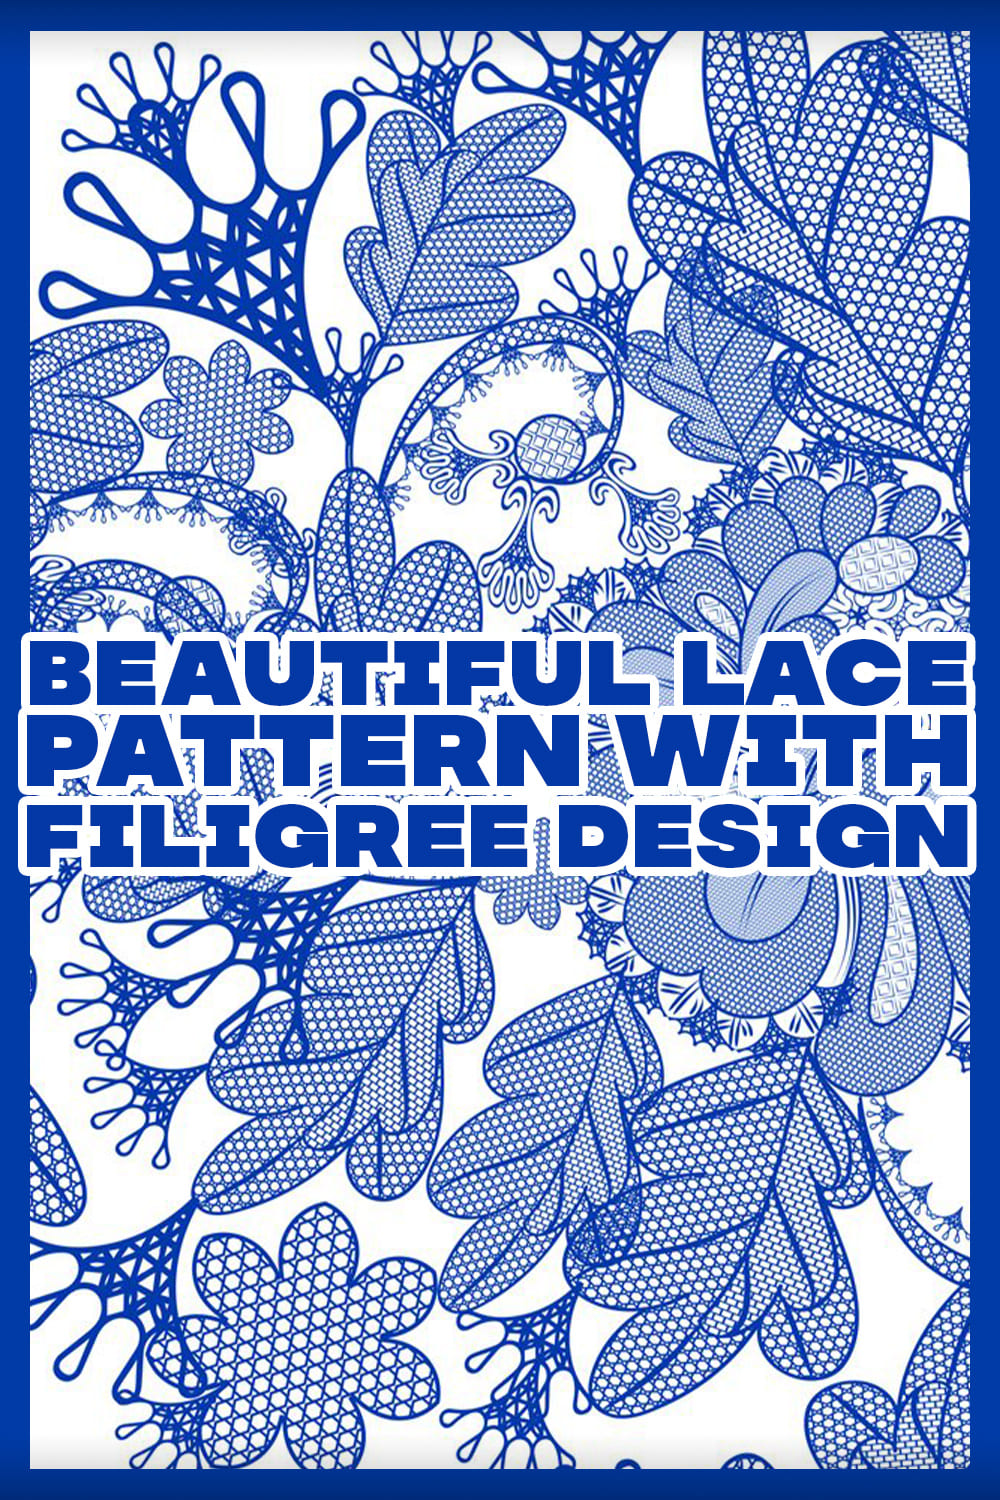 Beautiful Lace Pattern With Filigree Design - Pinterest.